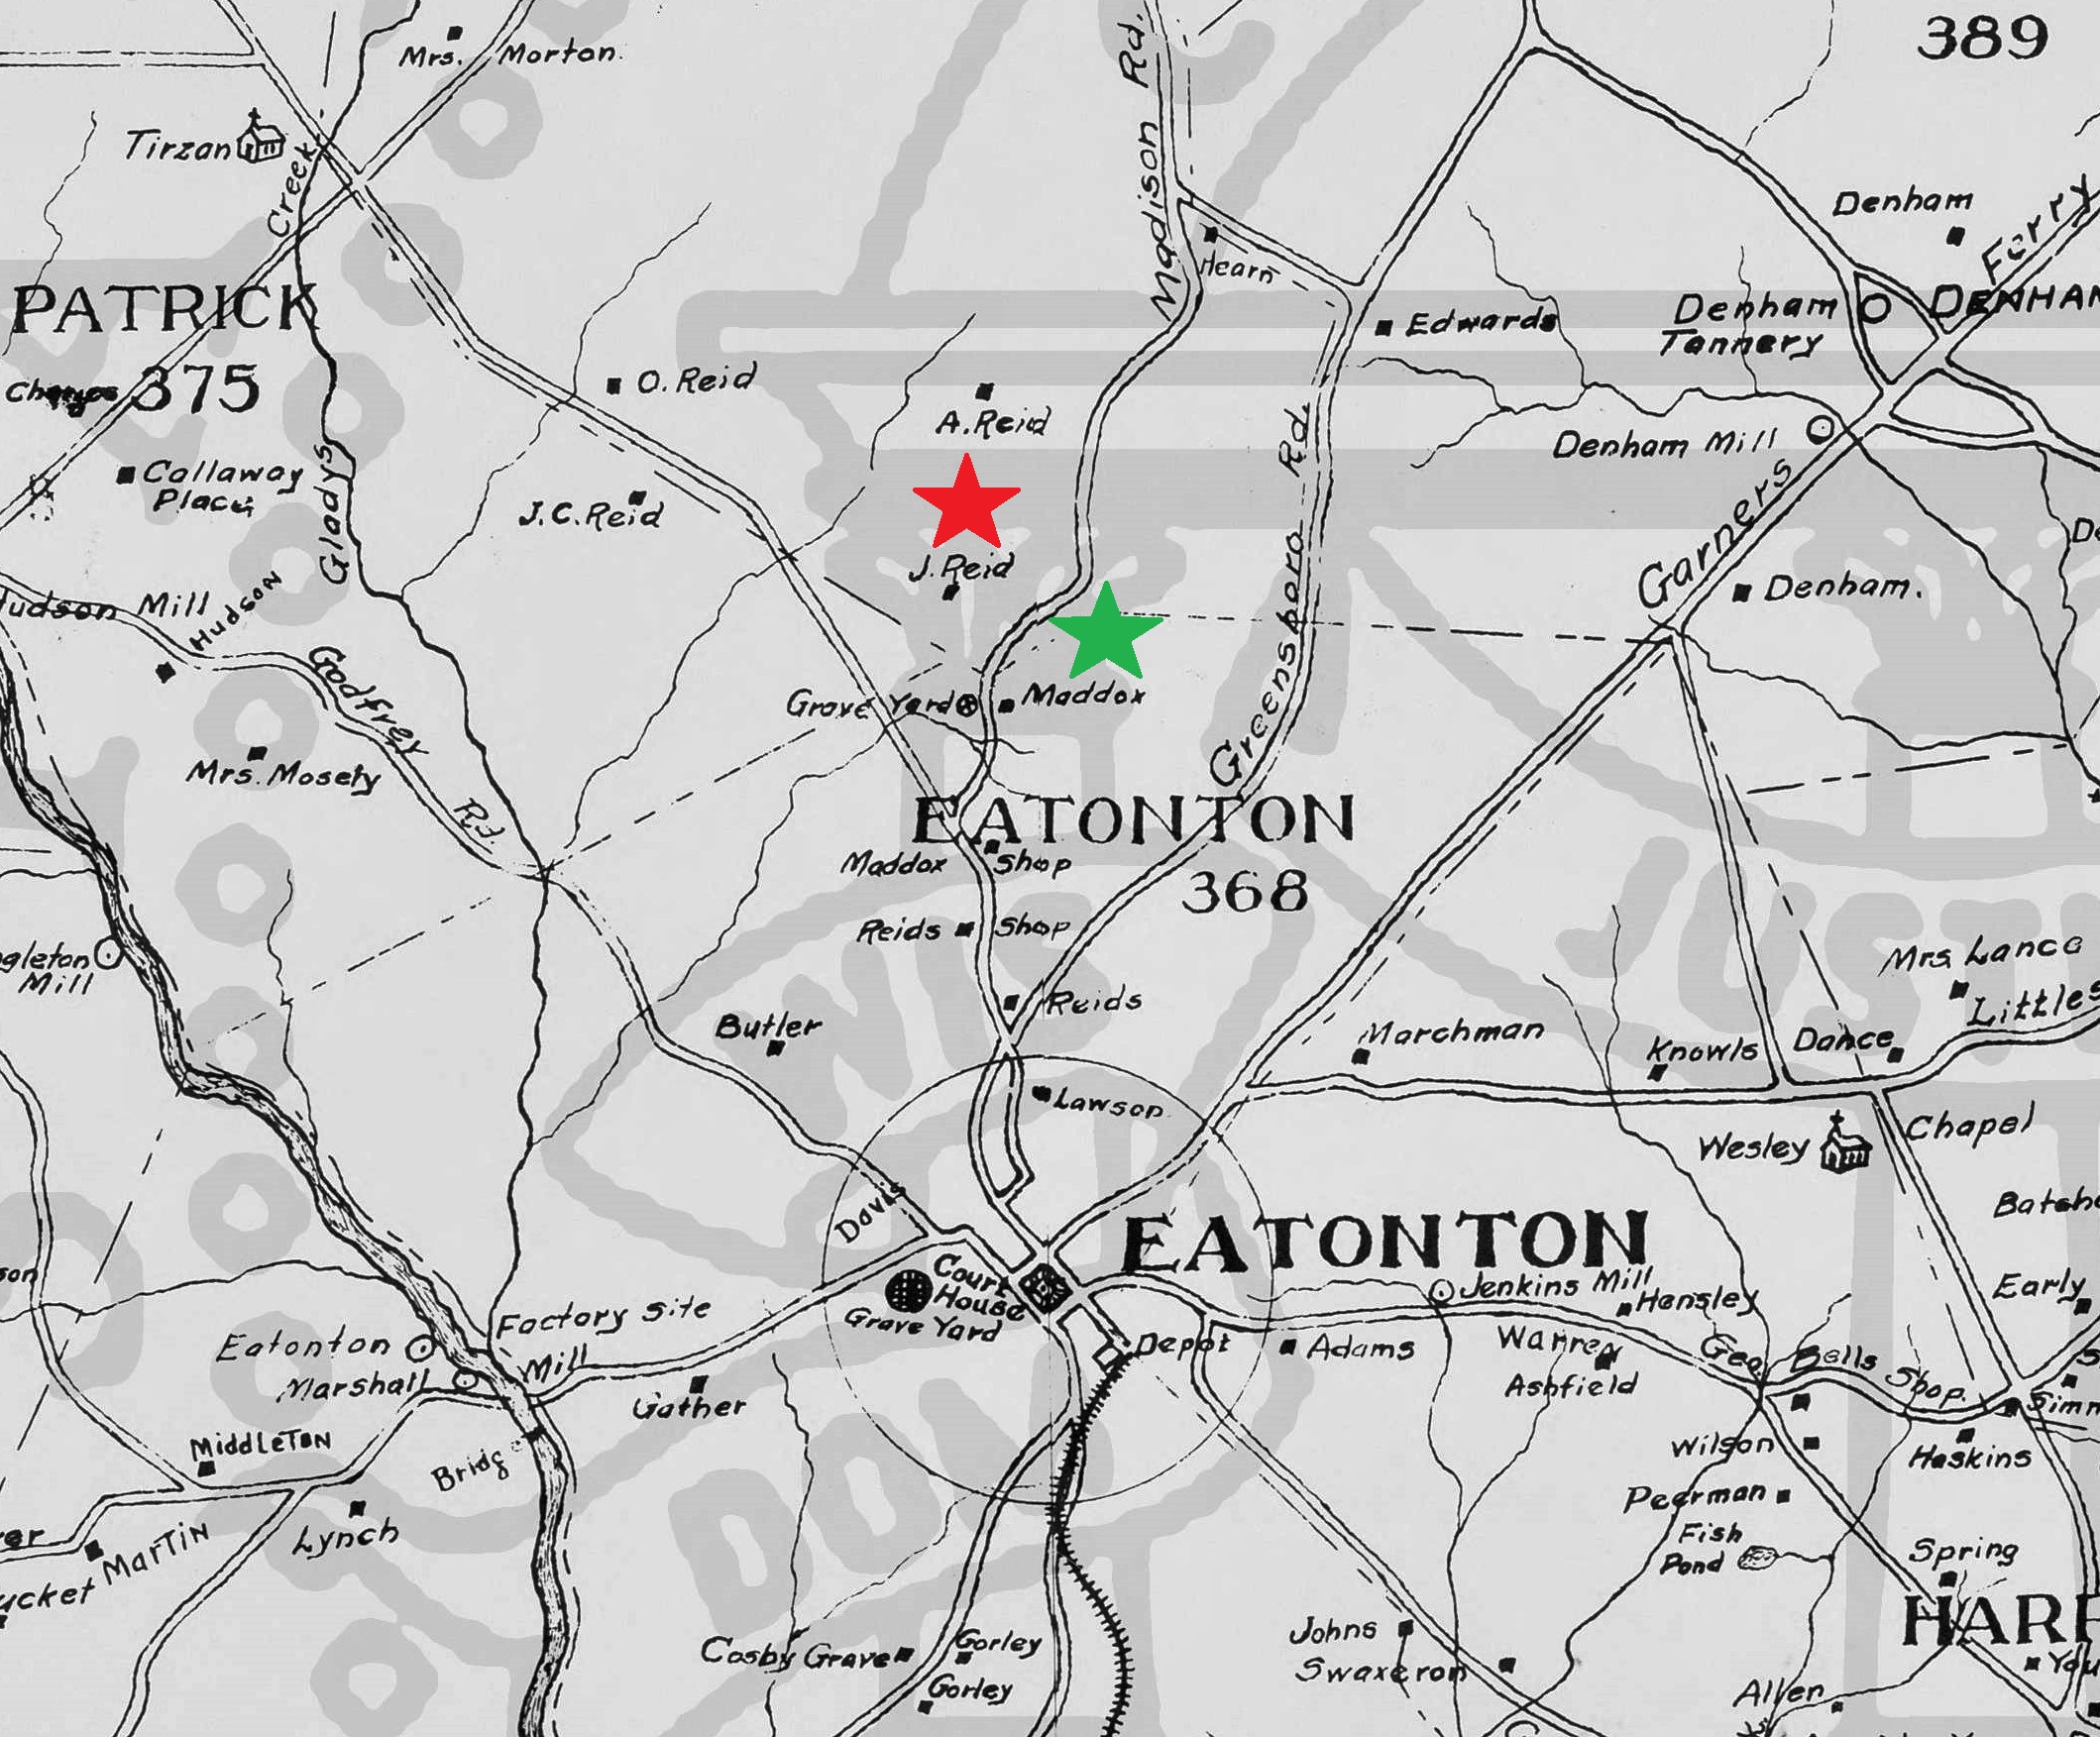 Map_of_Putnam_County 1878 - emp on Eatonton -Maddox